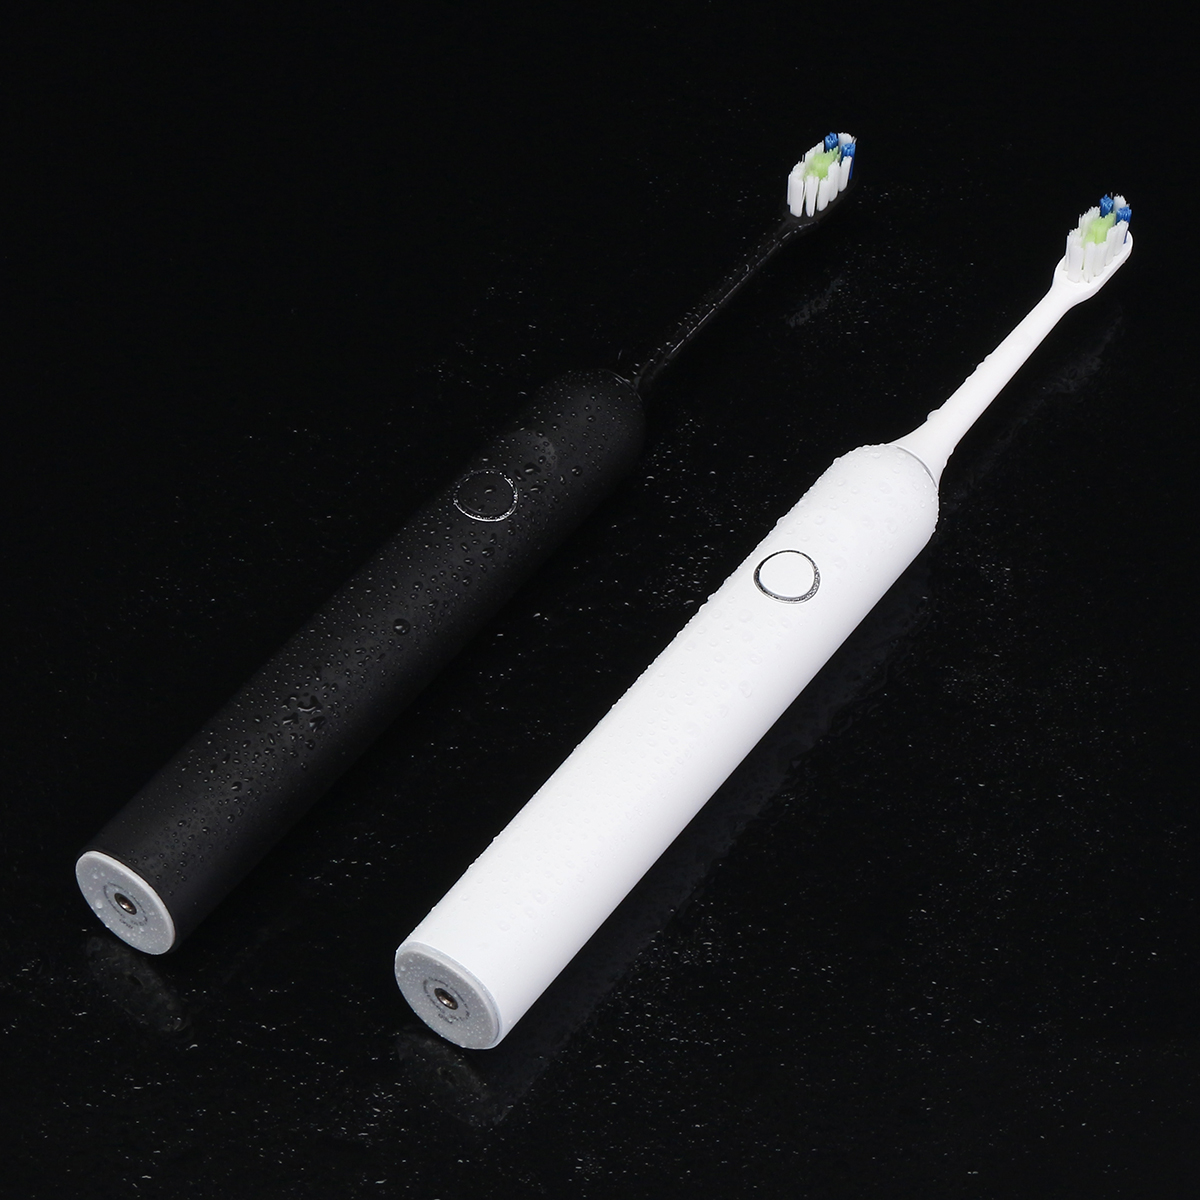 Waterproof-Rechargeable-Sonic-Electrric-Toothbrush-Upgraded-Ultrasonic-Electric-Toothbrush-1361114-1